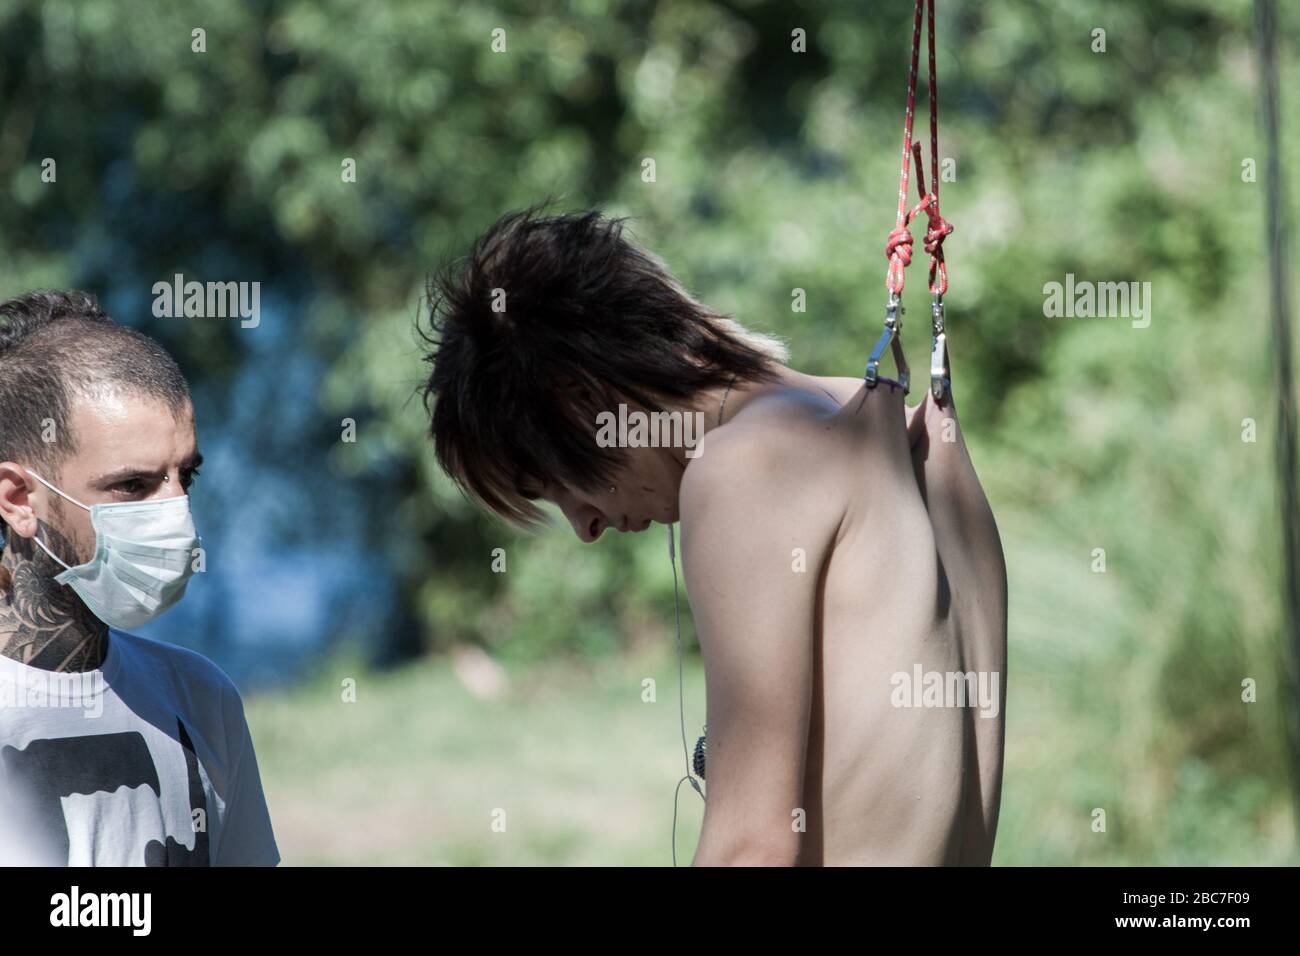 body piercing hanging at the lake Stock Photo